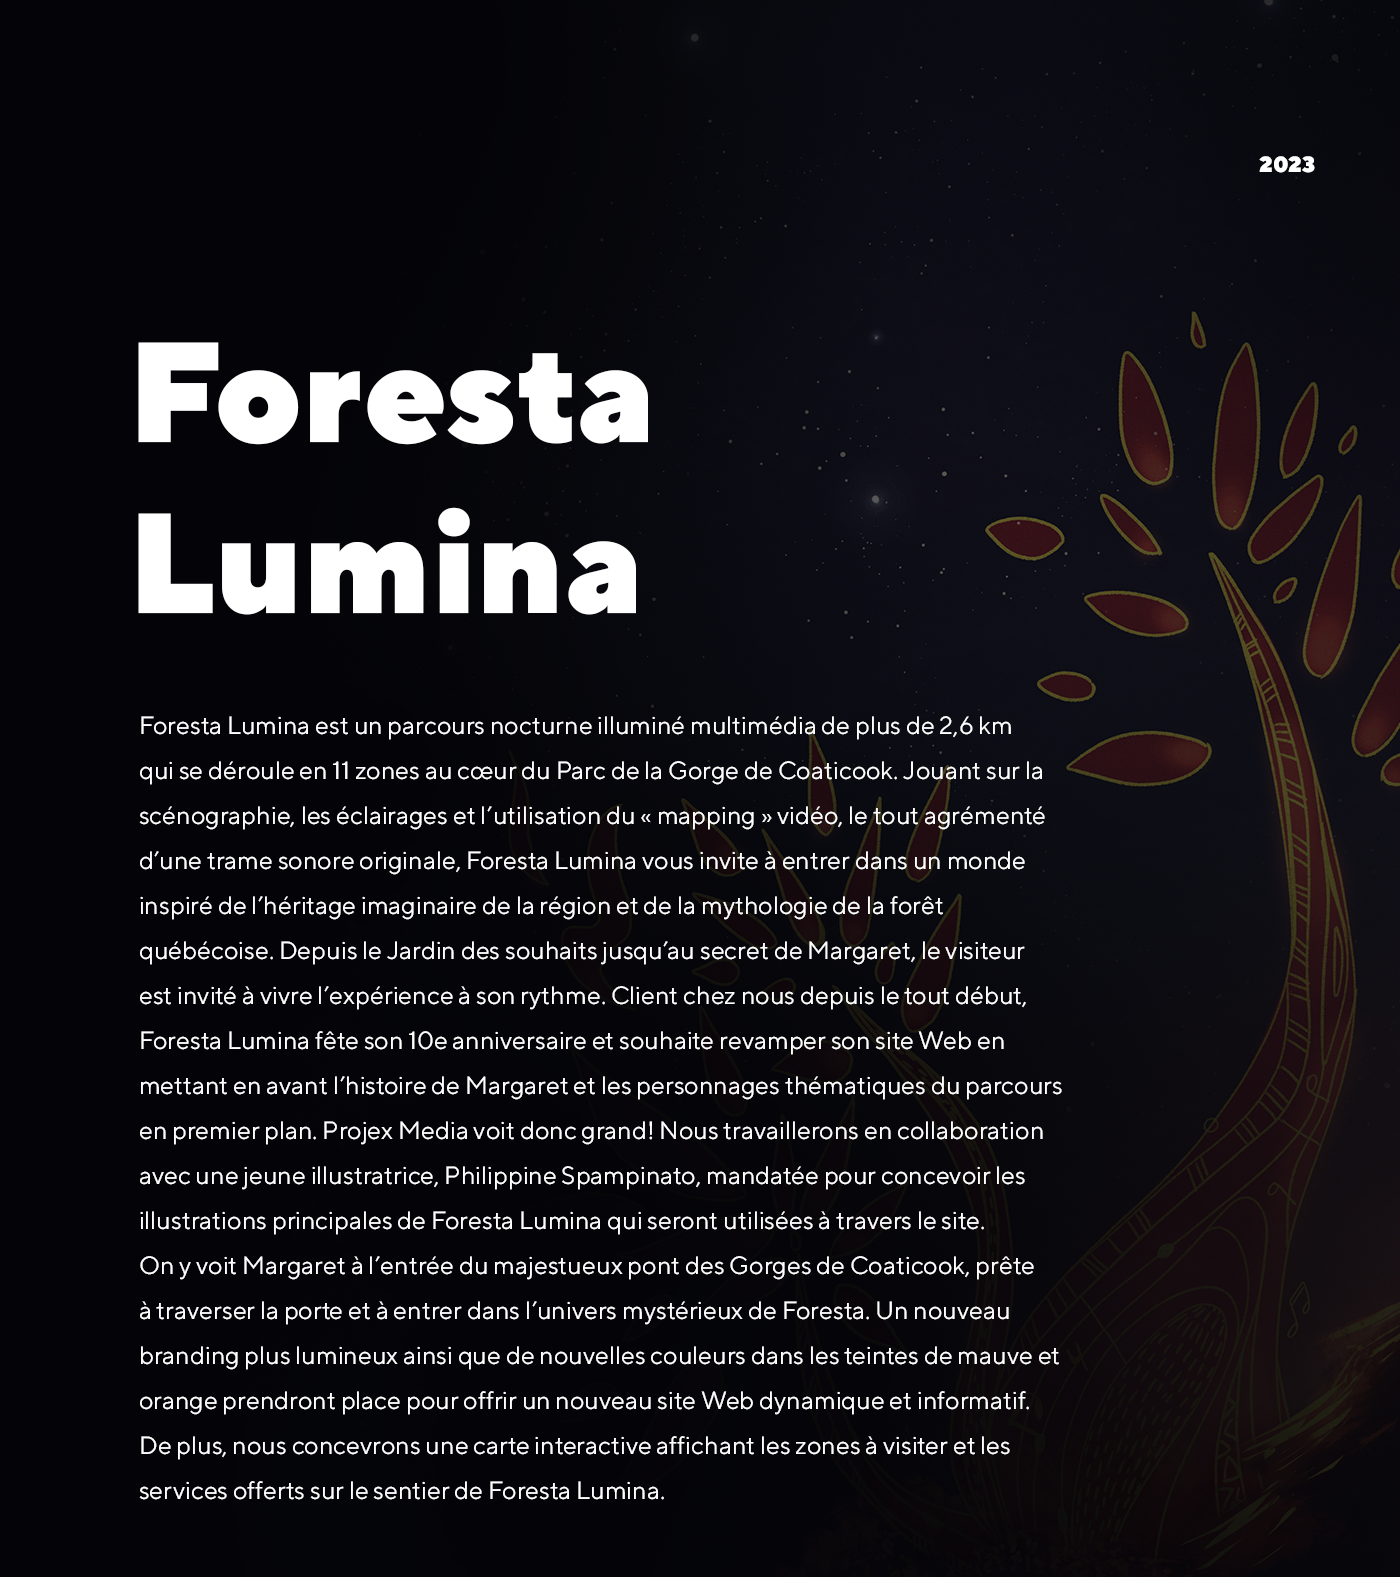 Foresta Lumina / 2023 - Réalisation signée Projex Media